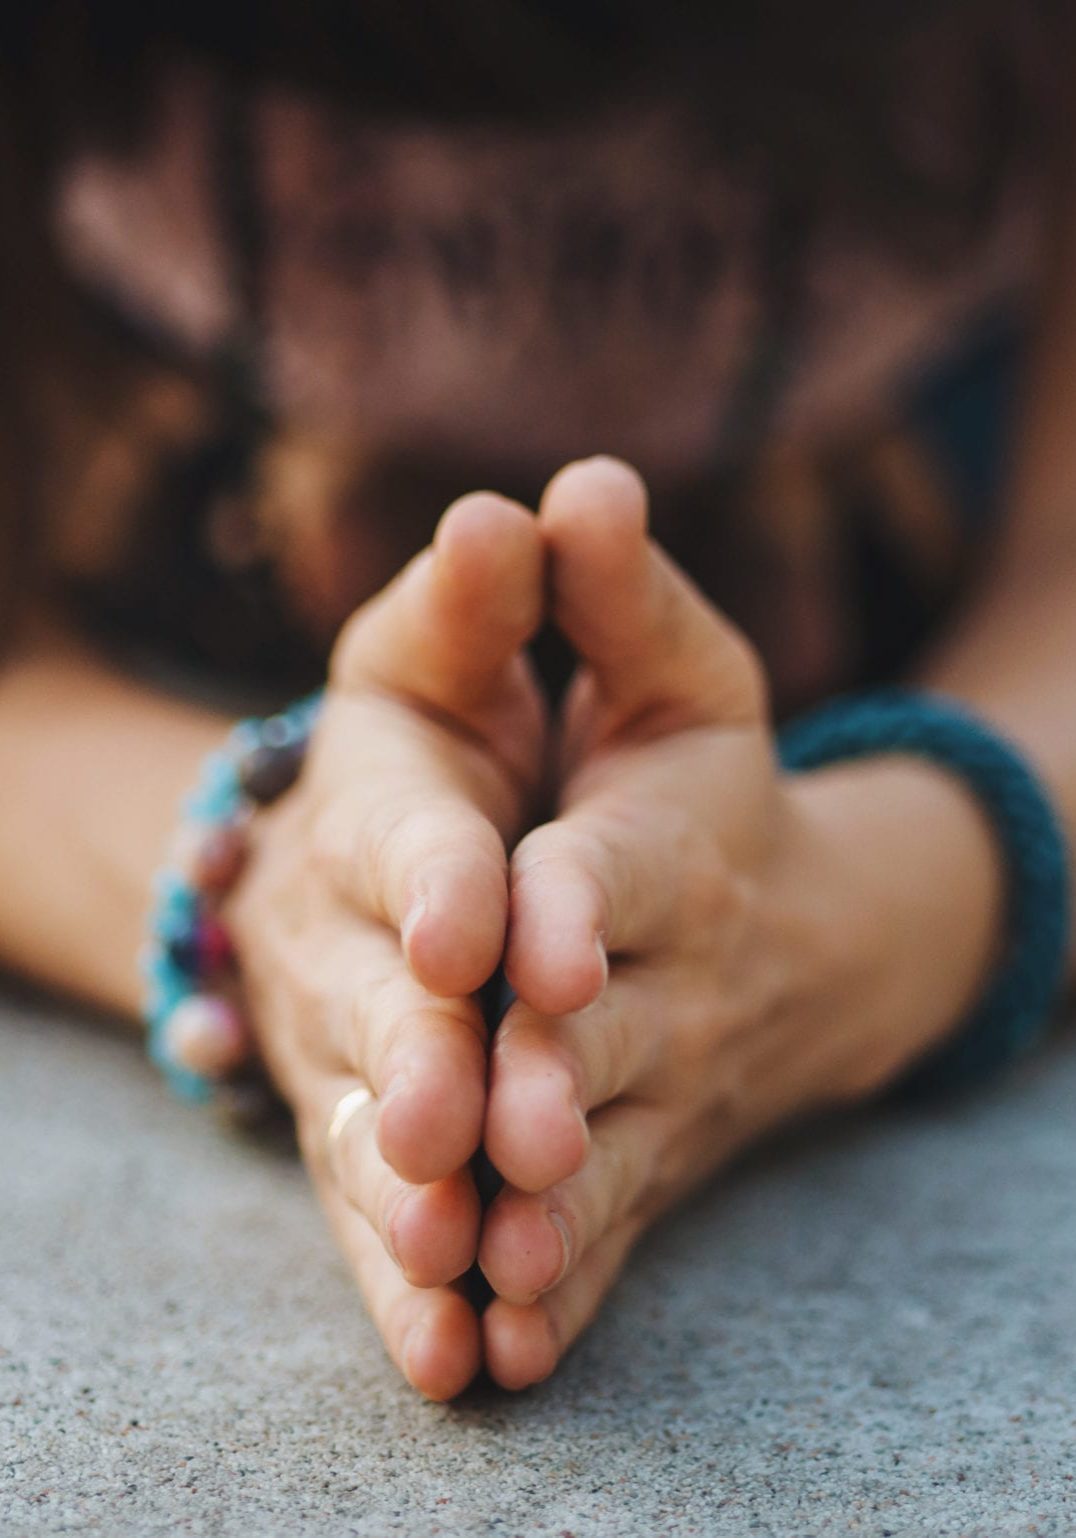 Woman hands together symbolizing prayer and gratitude. Mudra. Yoga concept.